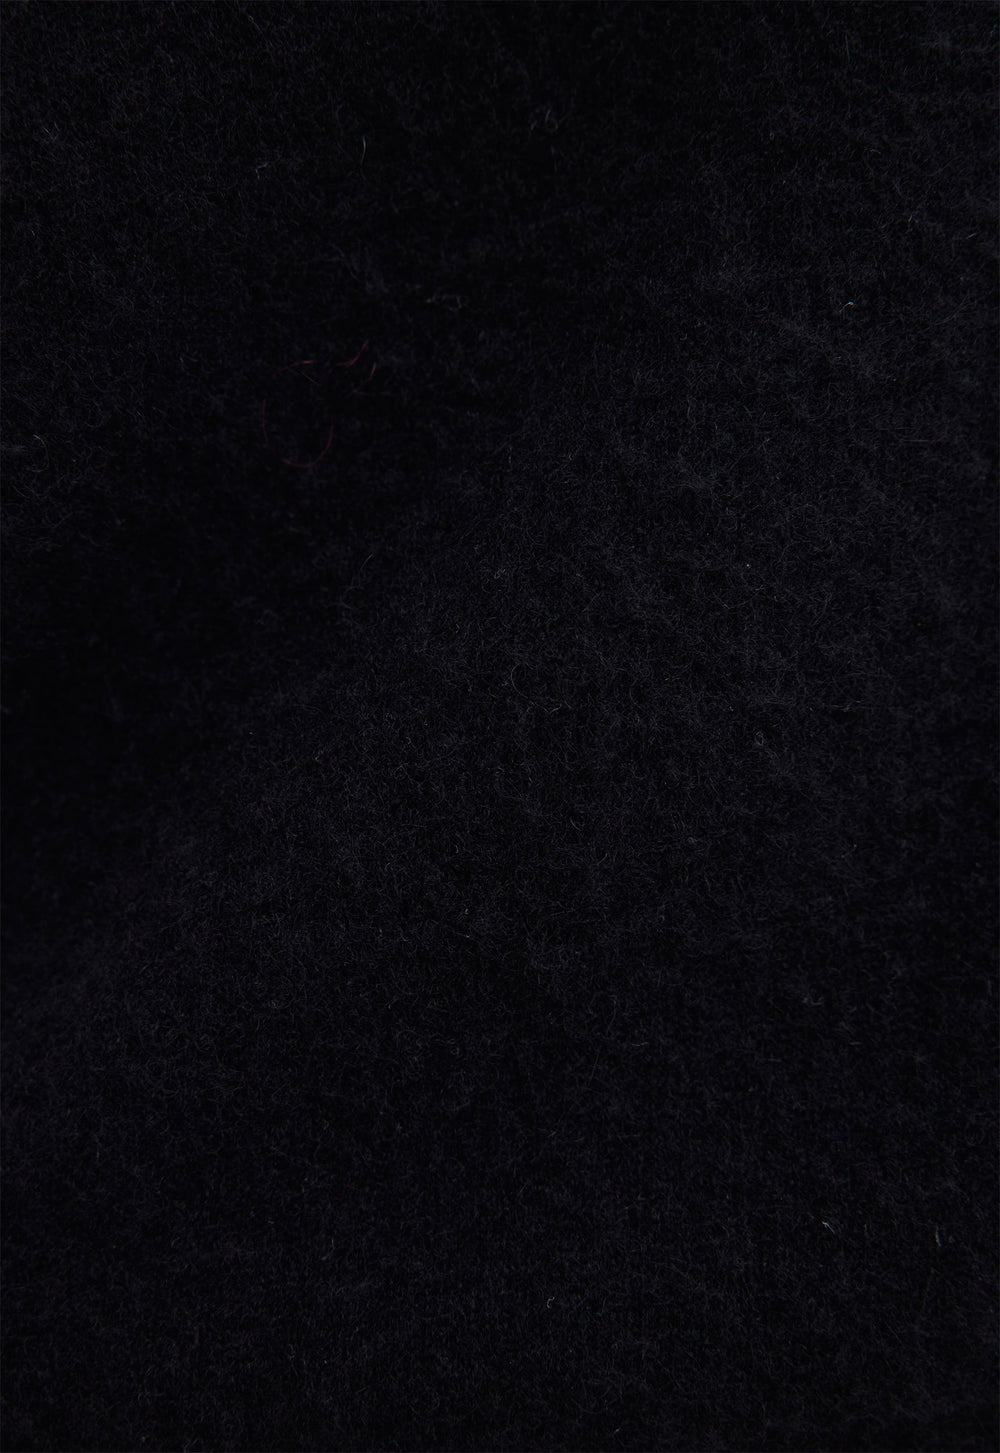 Jac+Jack Cirrus Cashmere Sweater - Black